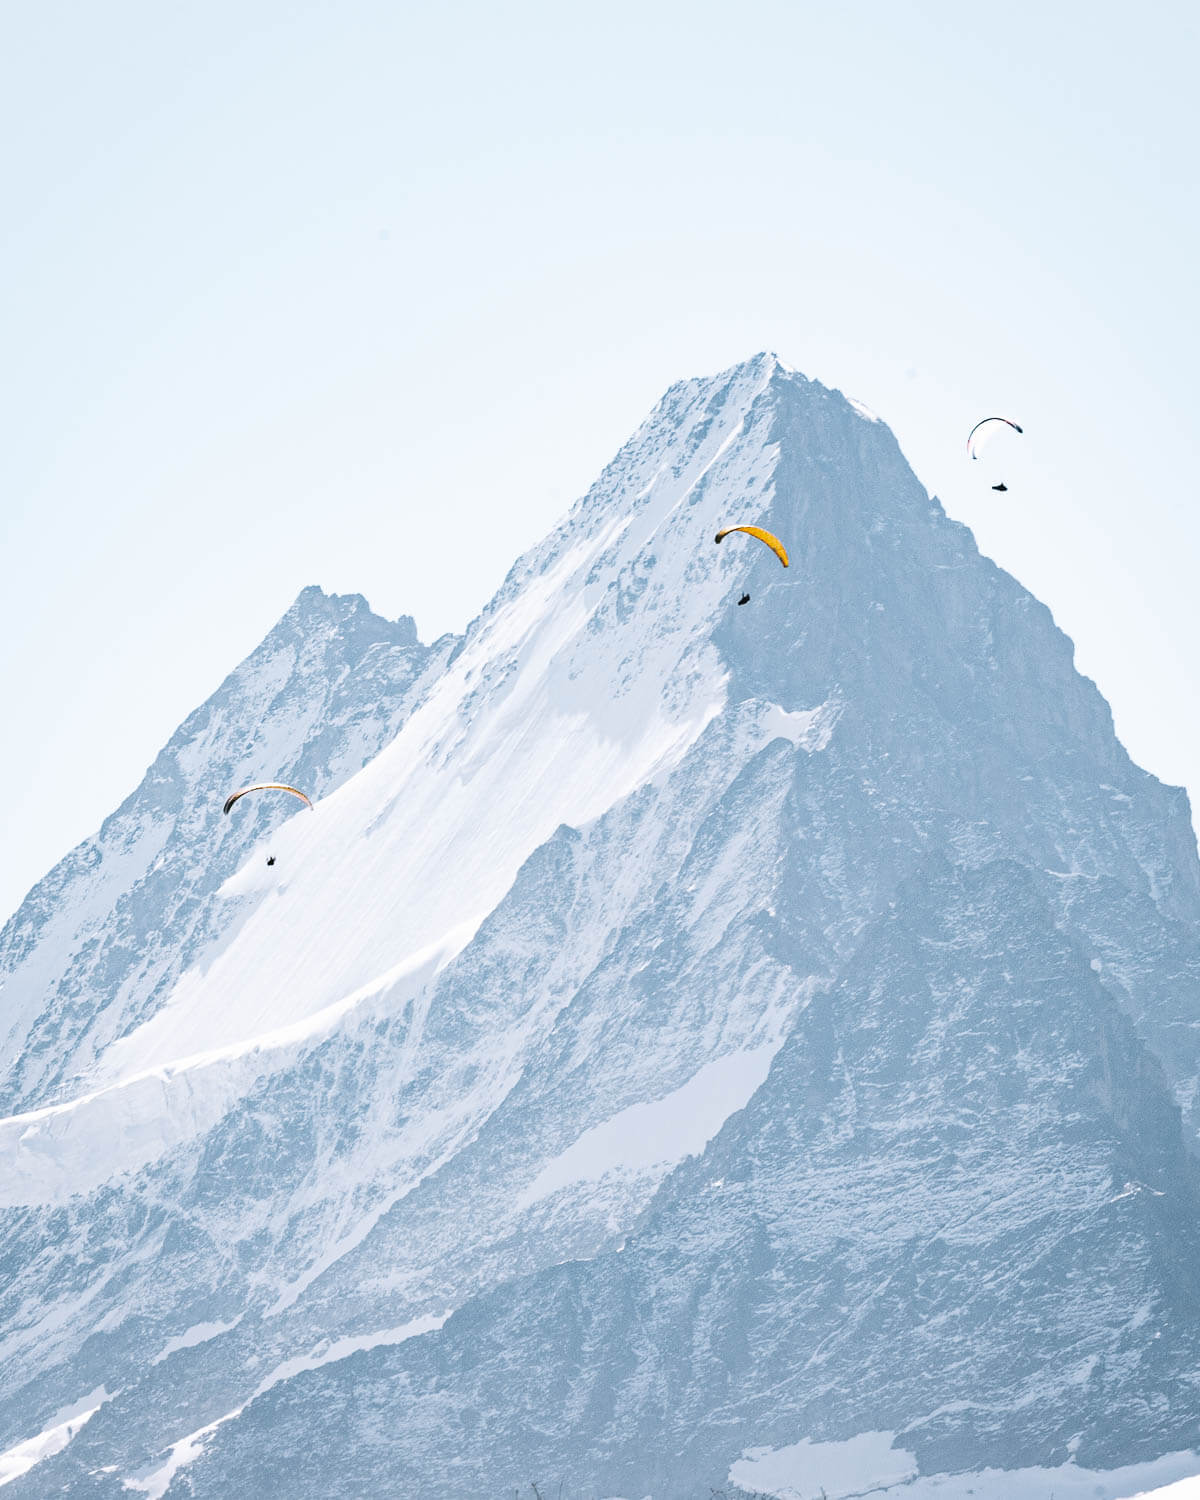 Paragliders and the Schreckhorn